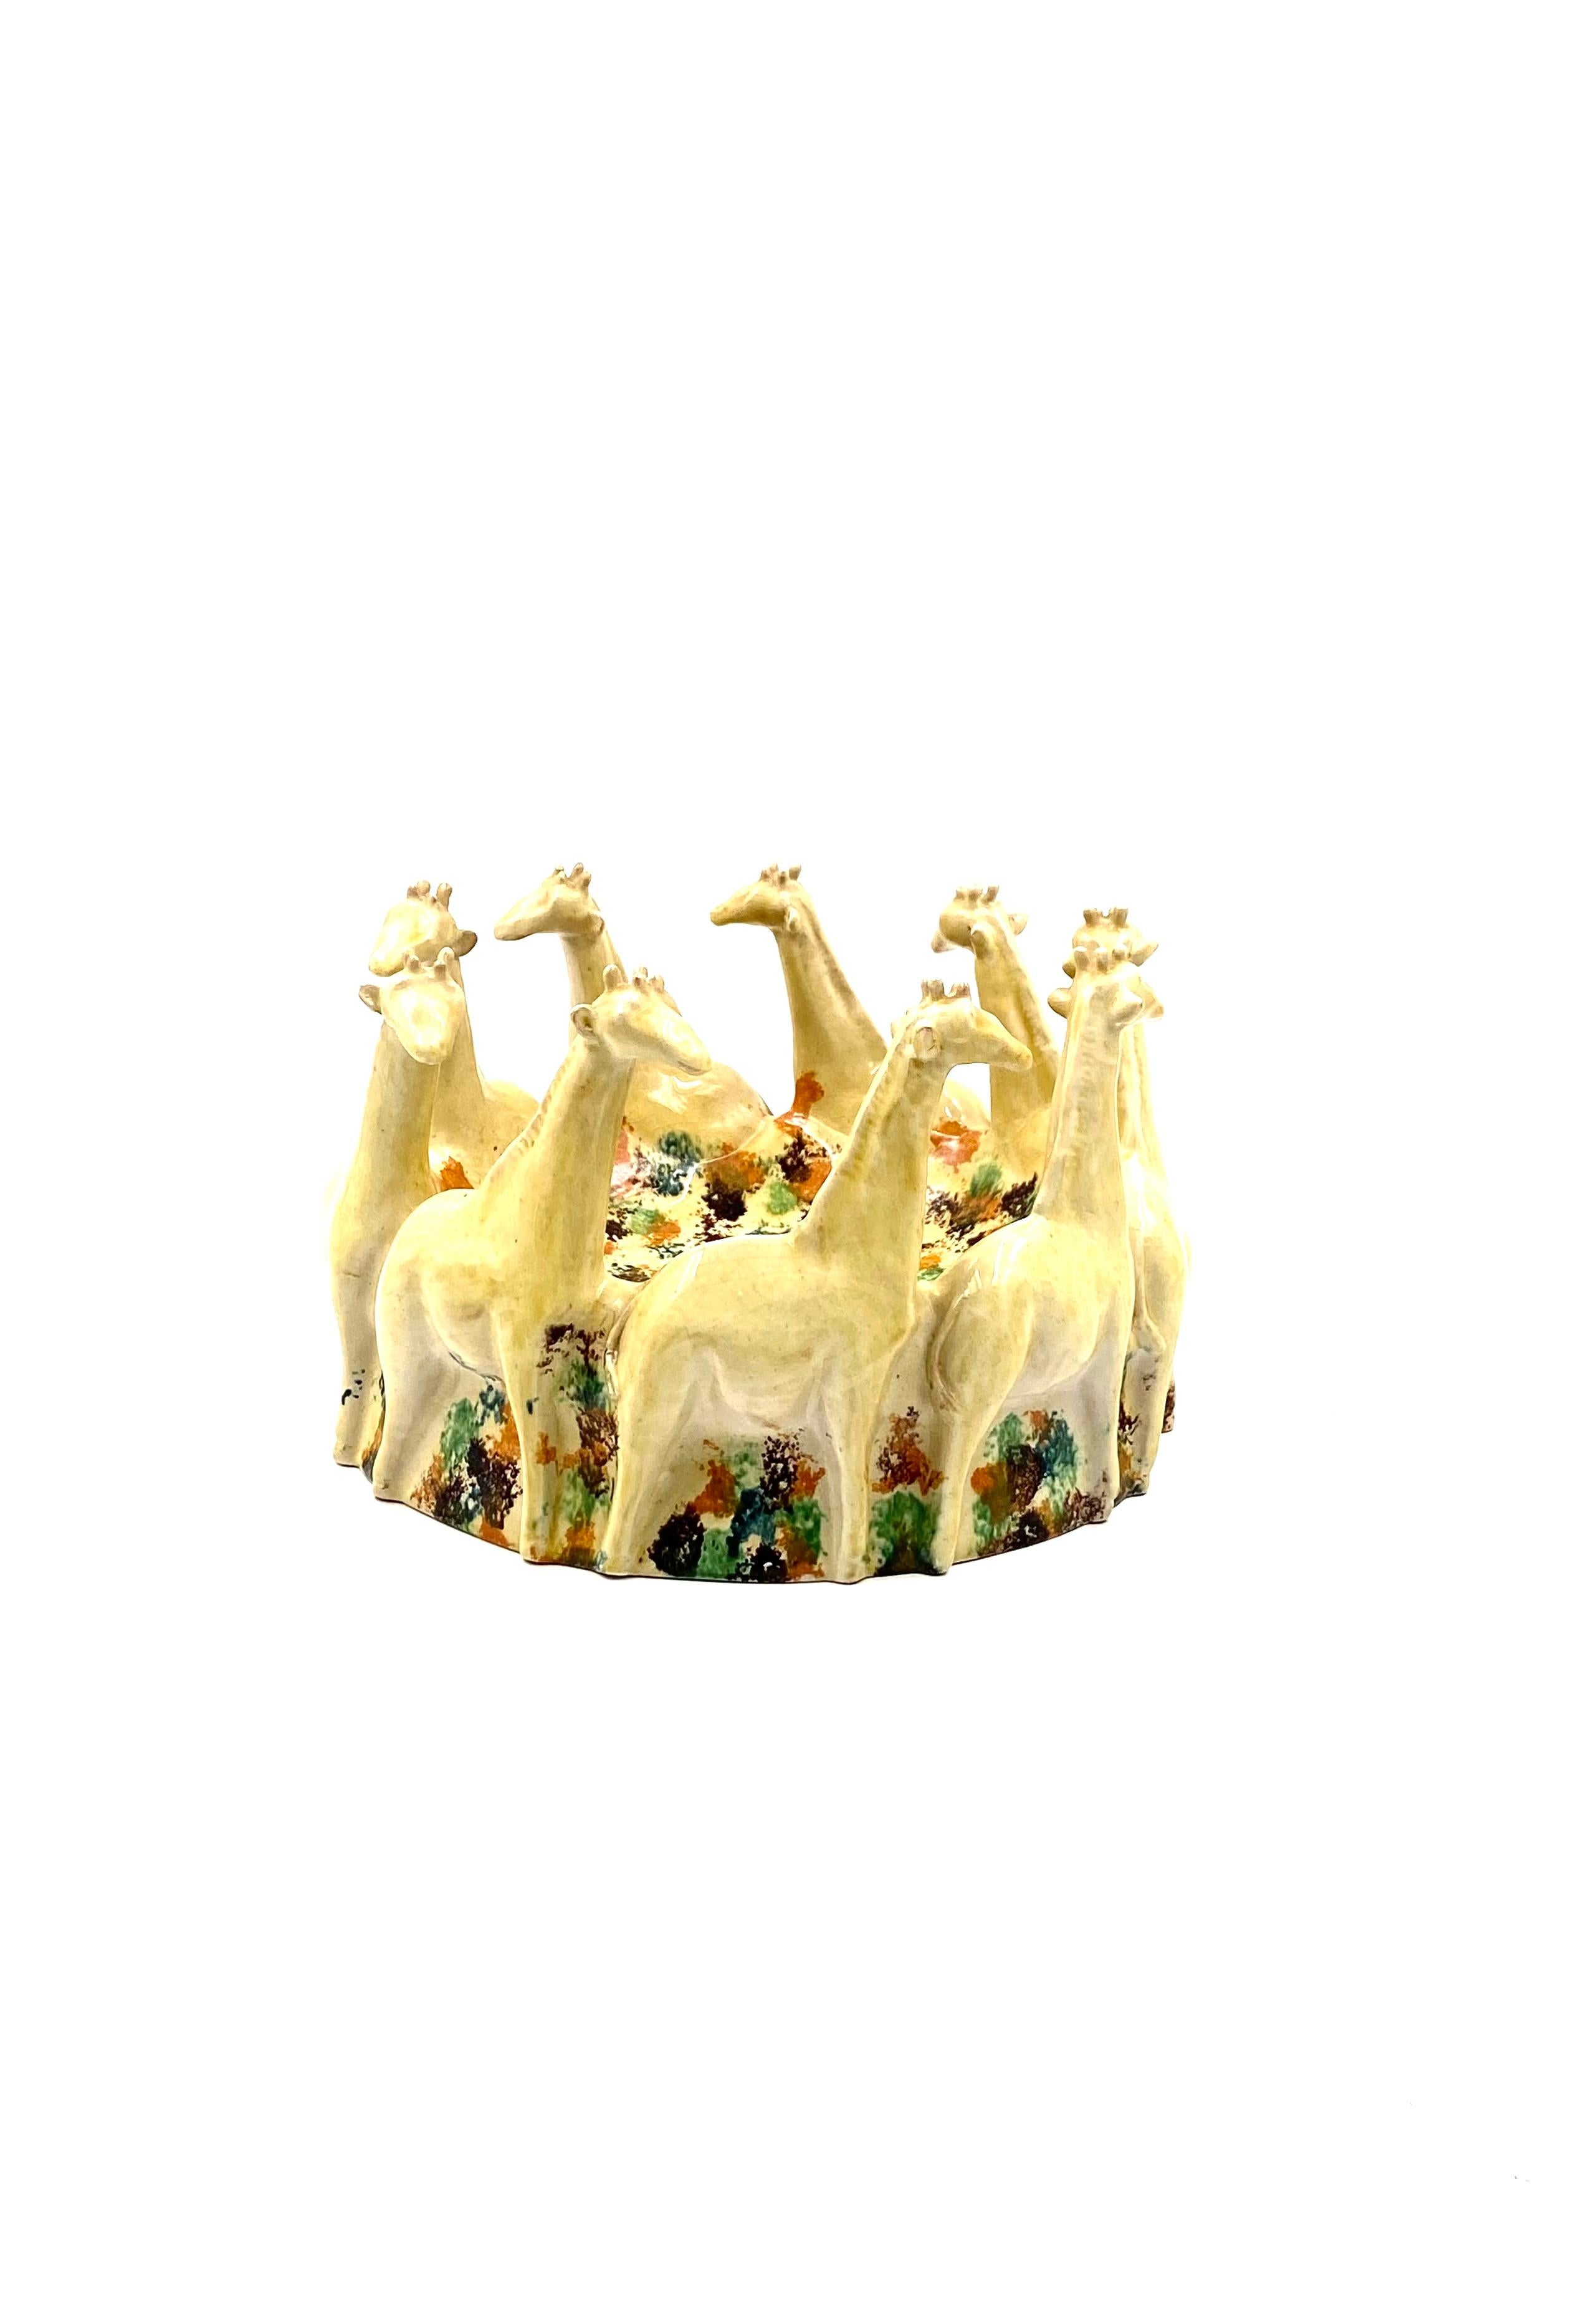 Postmodern giraffe ceramic centerpiece / vide poche, ND Dolfi Italy, 1990s For Sale 11